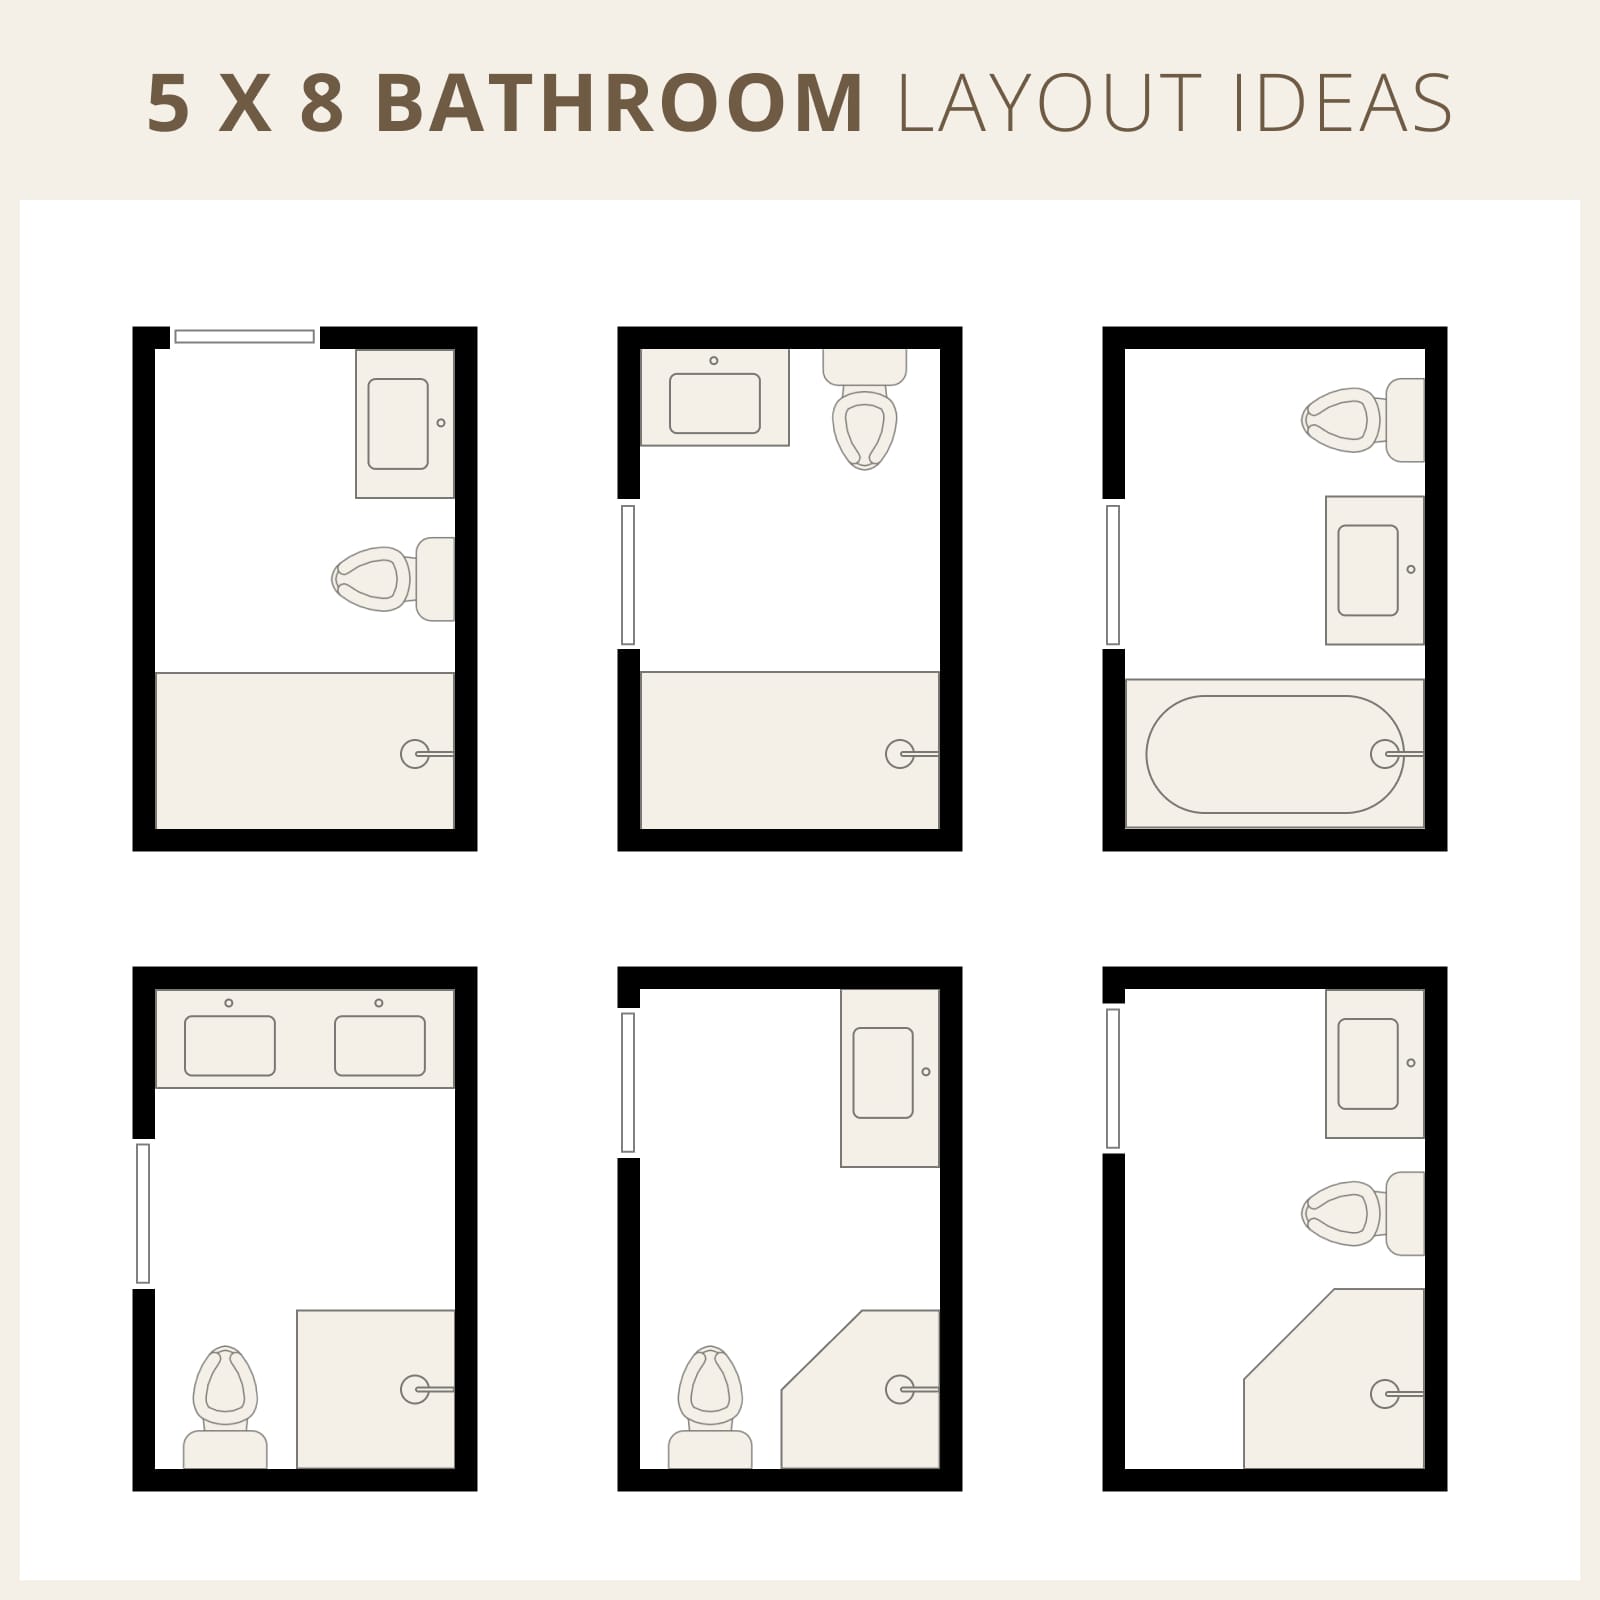 5 x 8 bathroom layout ideas for small bathroom. 5 ft by 8 ft floorplan.